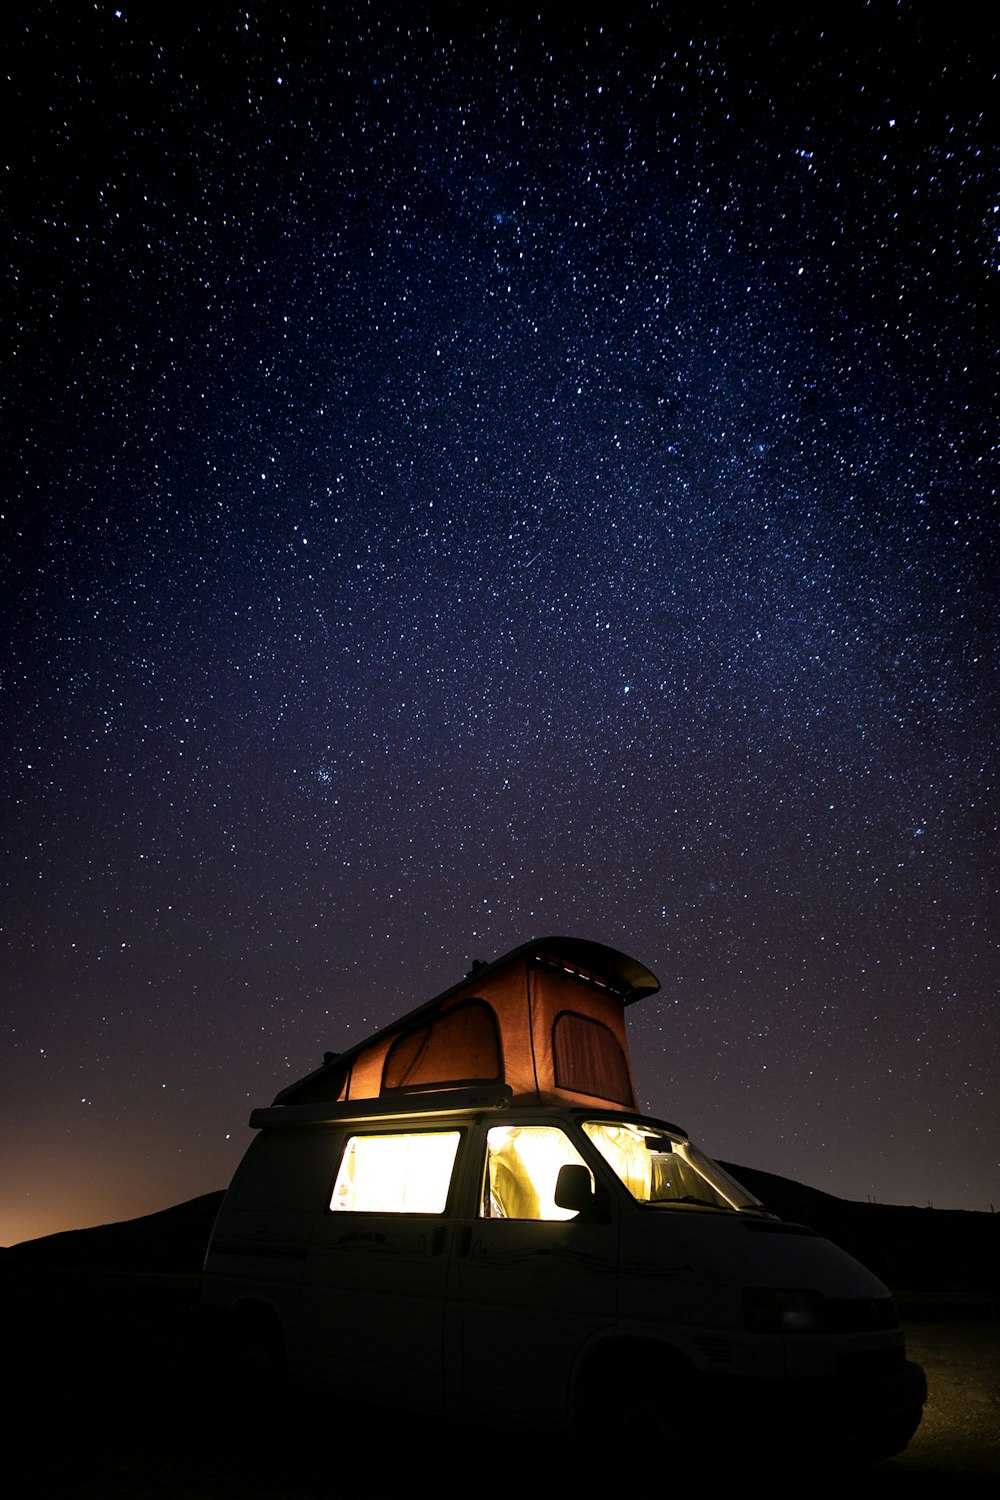 camper van under starry sky during nighttime